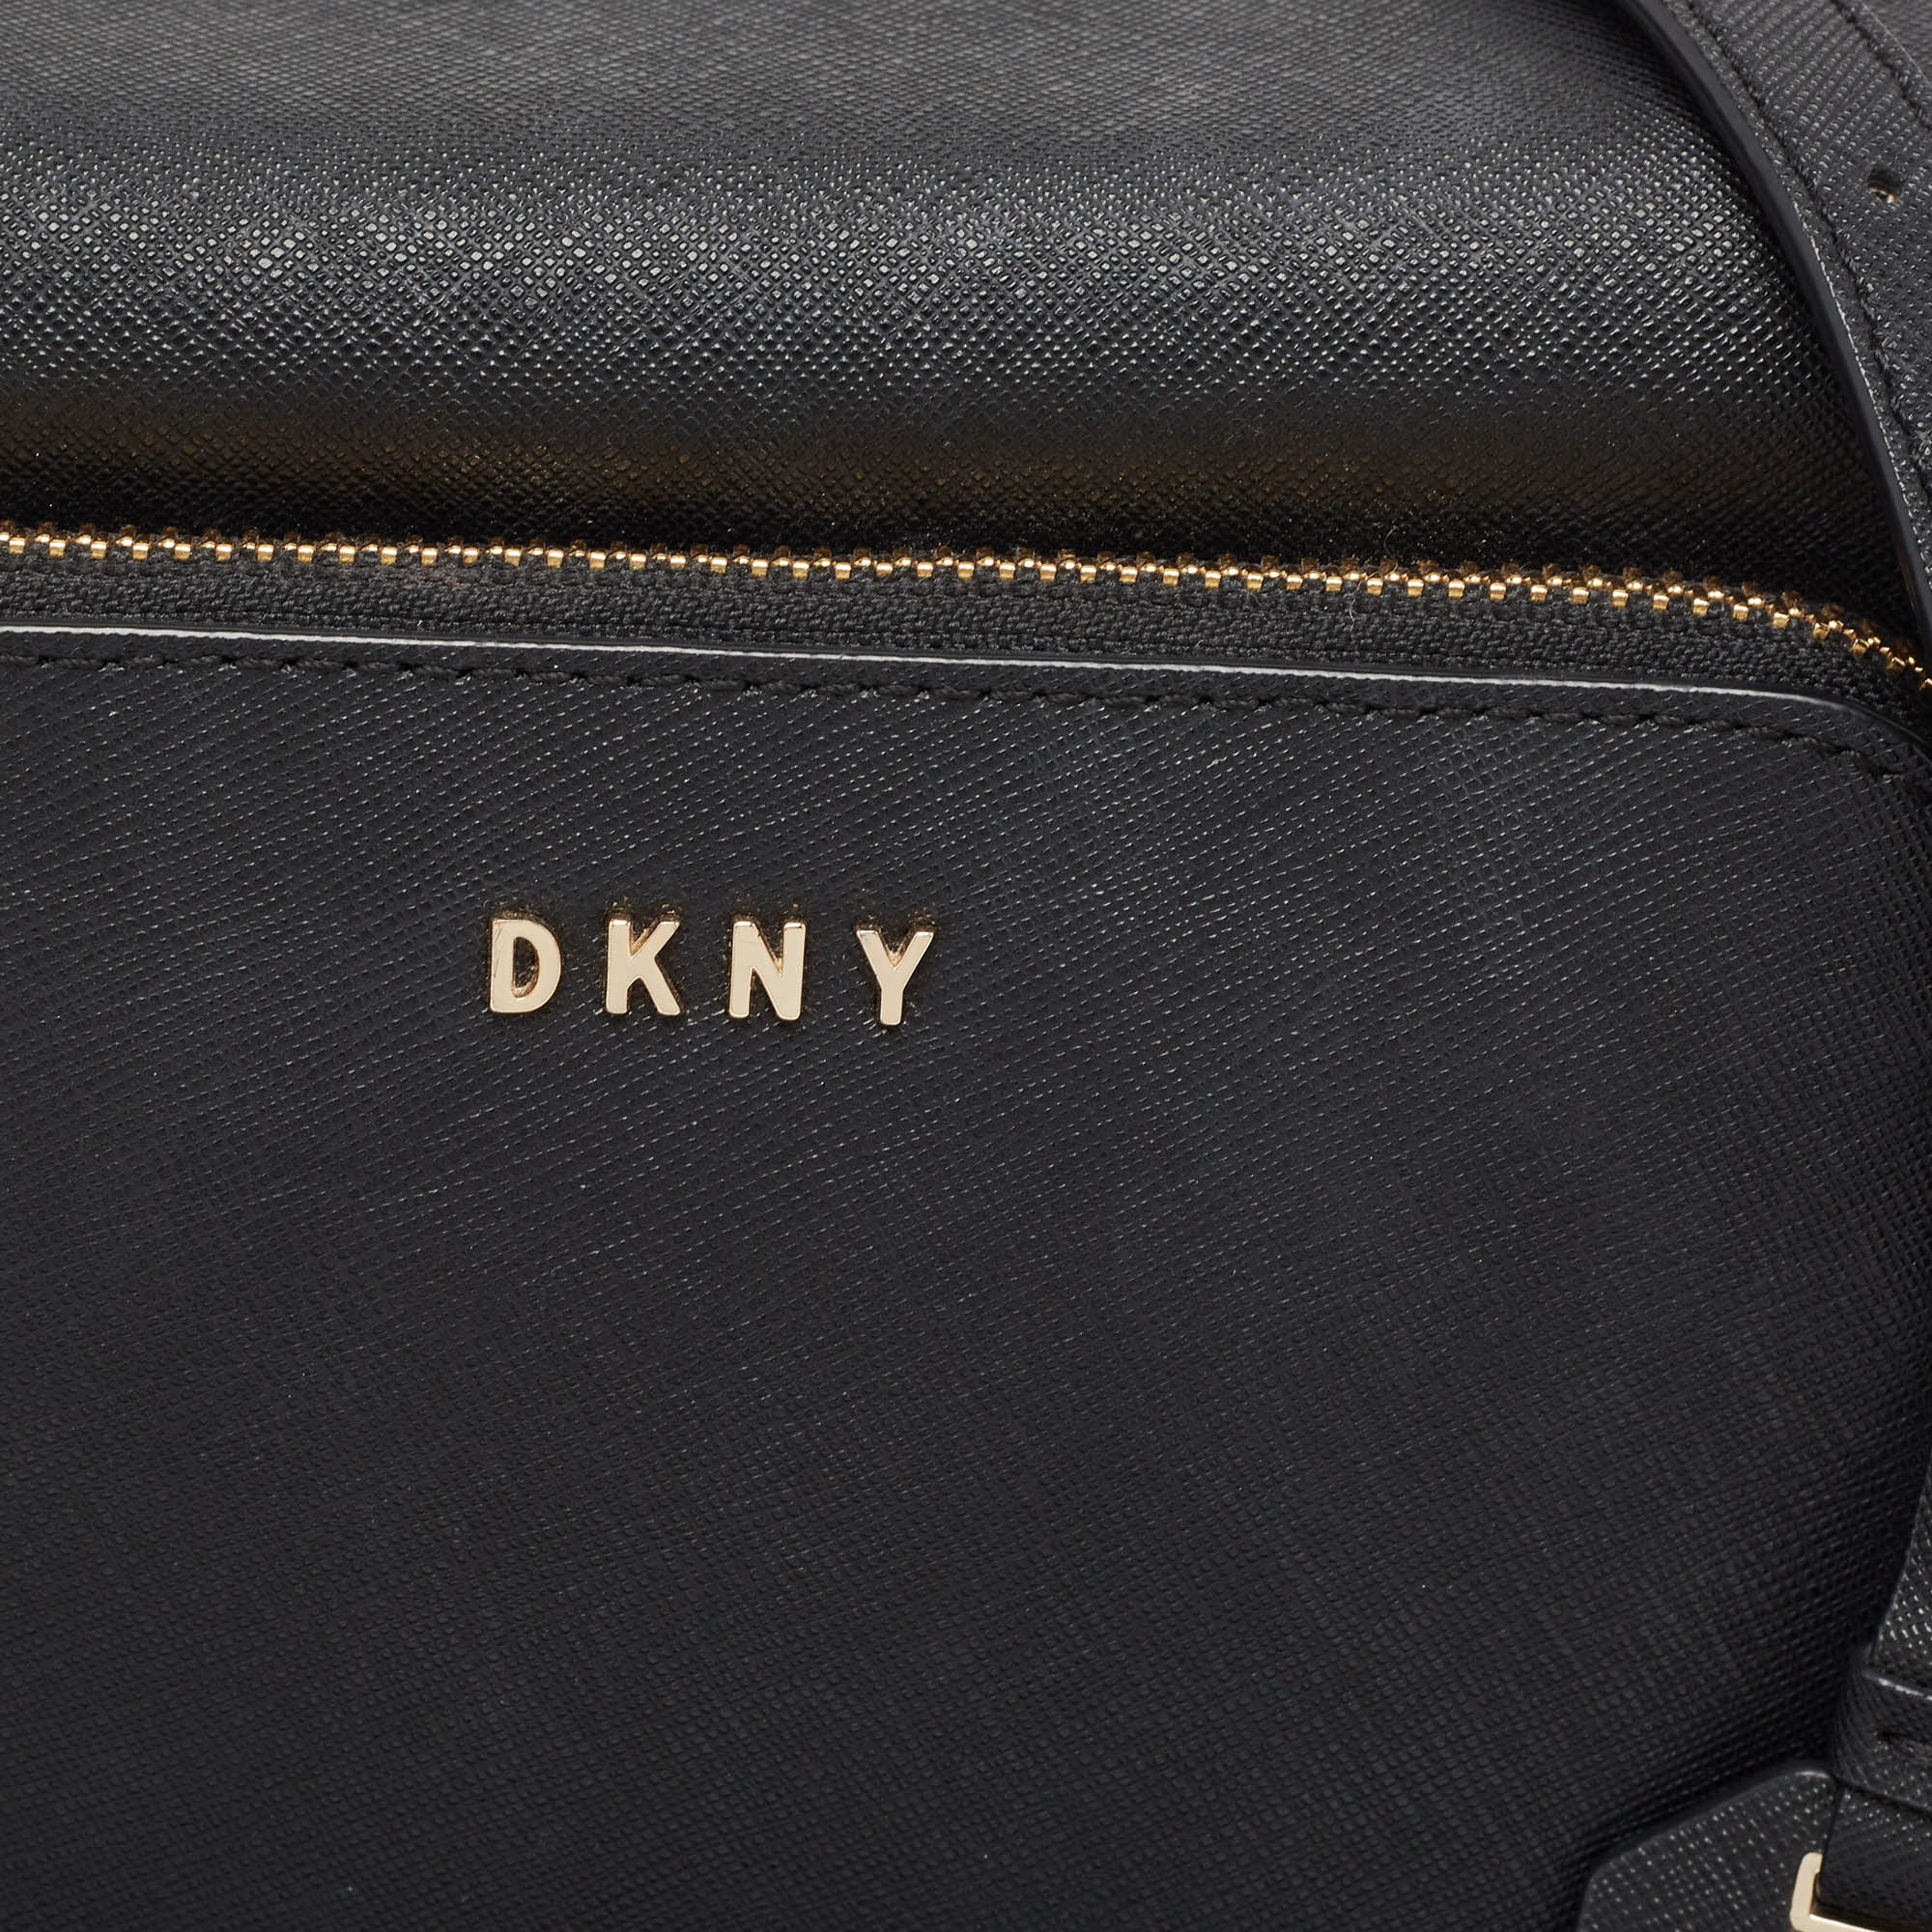 DKNY Black Leather Front Zip Crossbody Bag